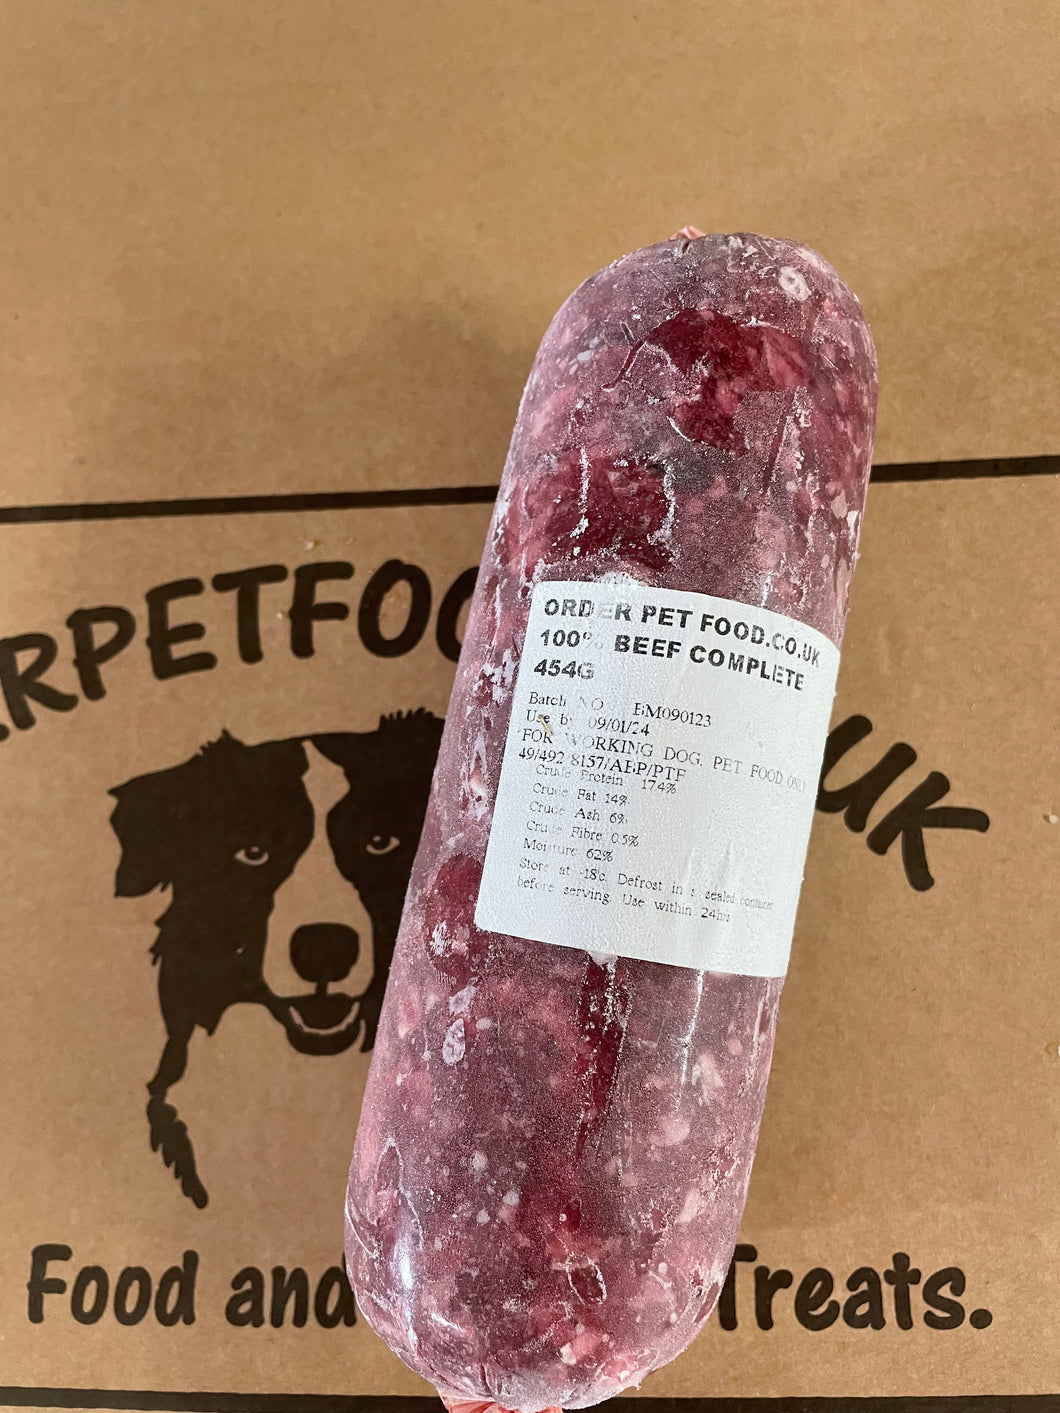 Orderpetfood.co.uk - Best Beef Complete 80/10/10.